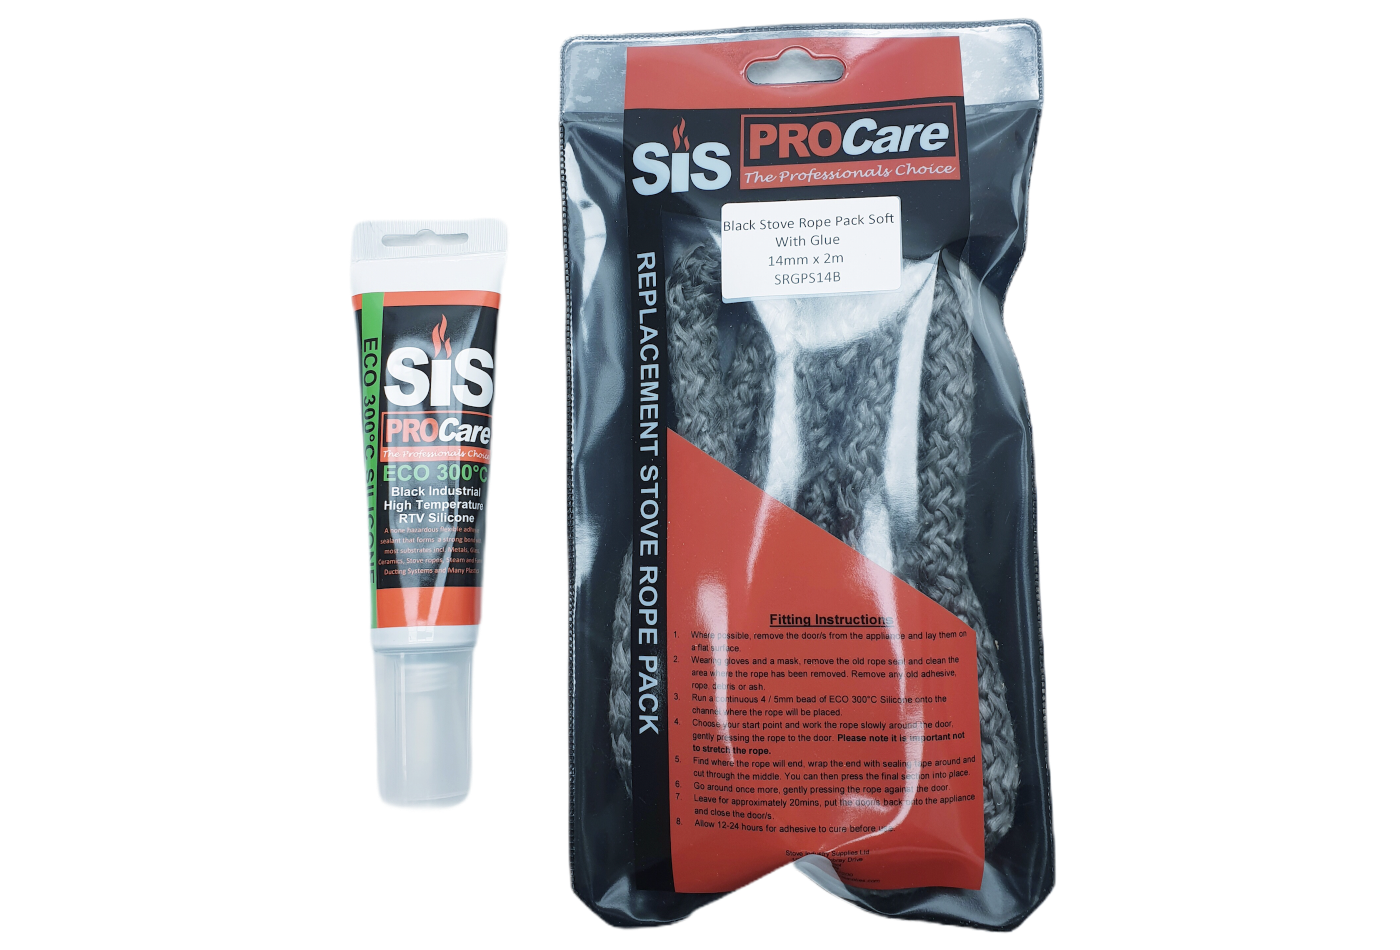 SiS Procare Black 14 milimetre x 2 metre Black Soft Stove Rope & 80 millilitre Rope Glue Pack - product code SRGPS14B